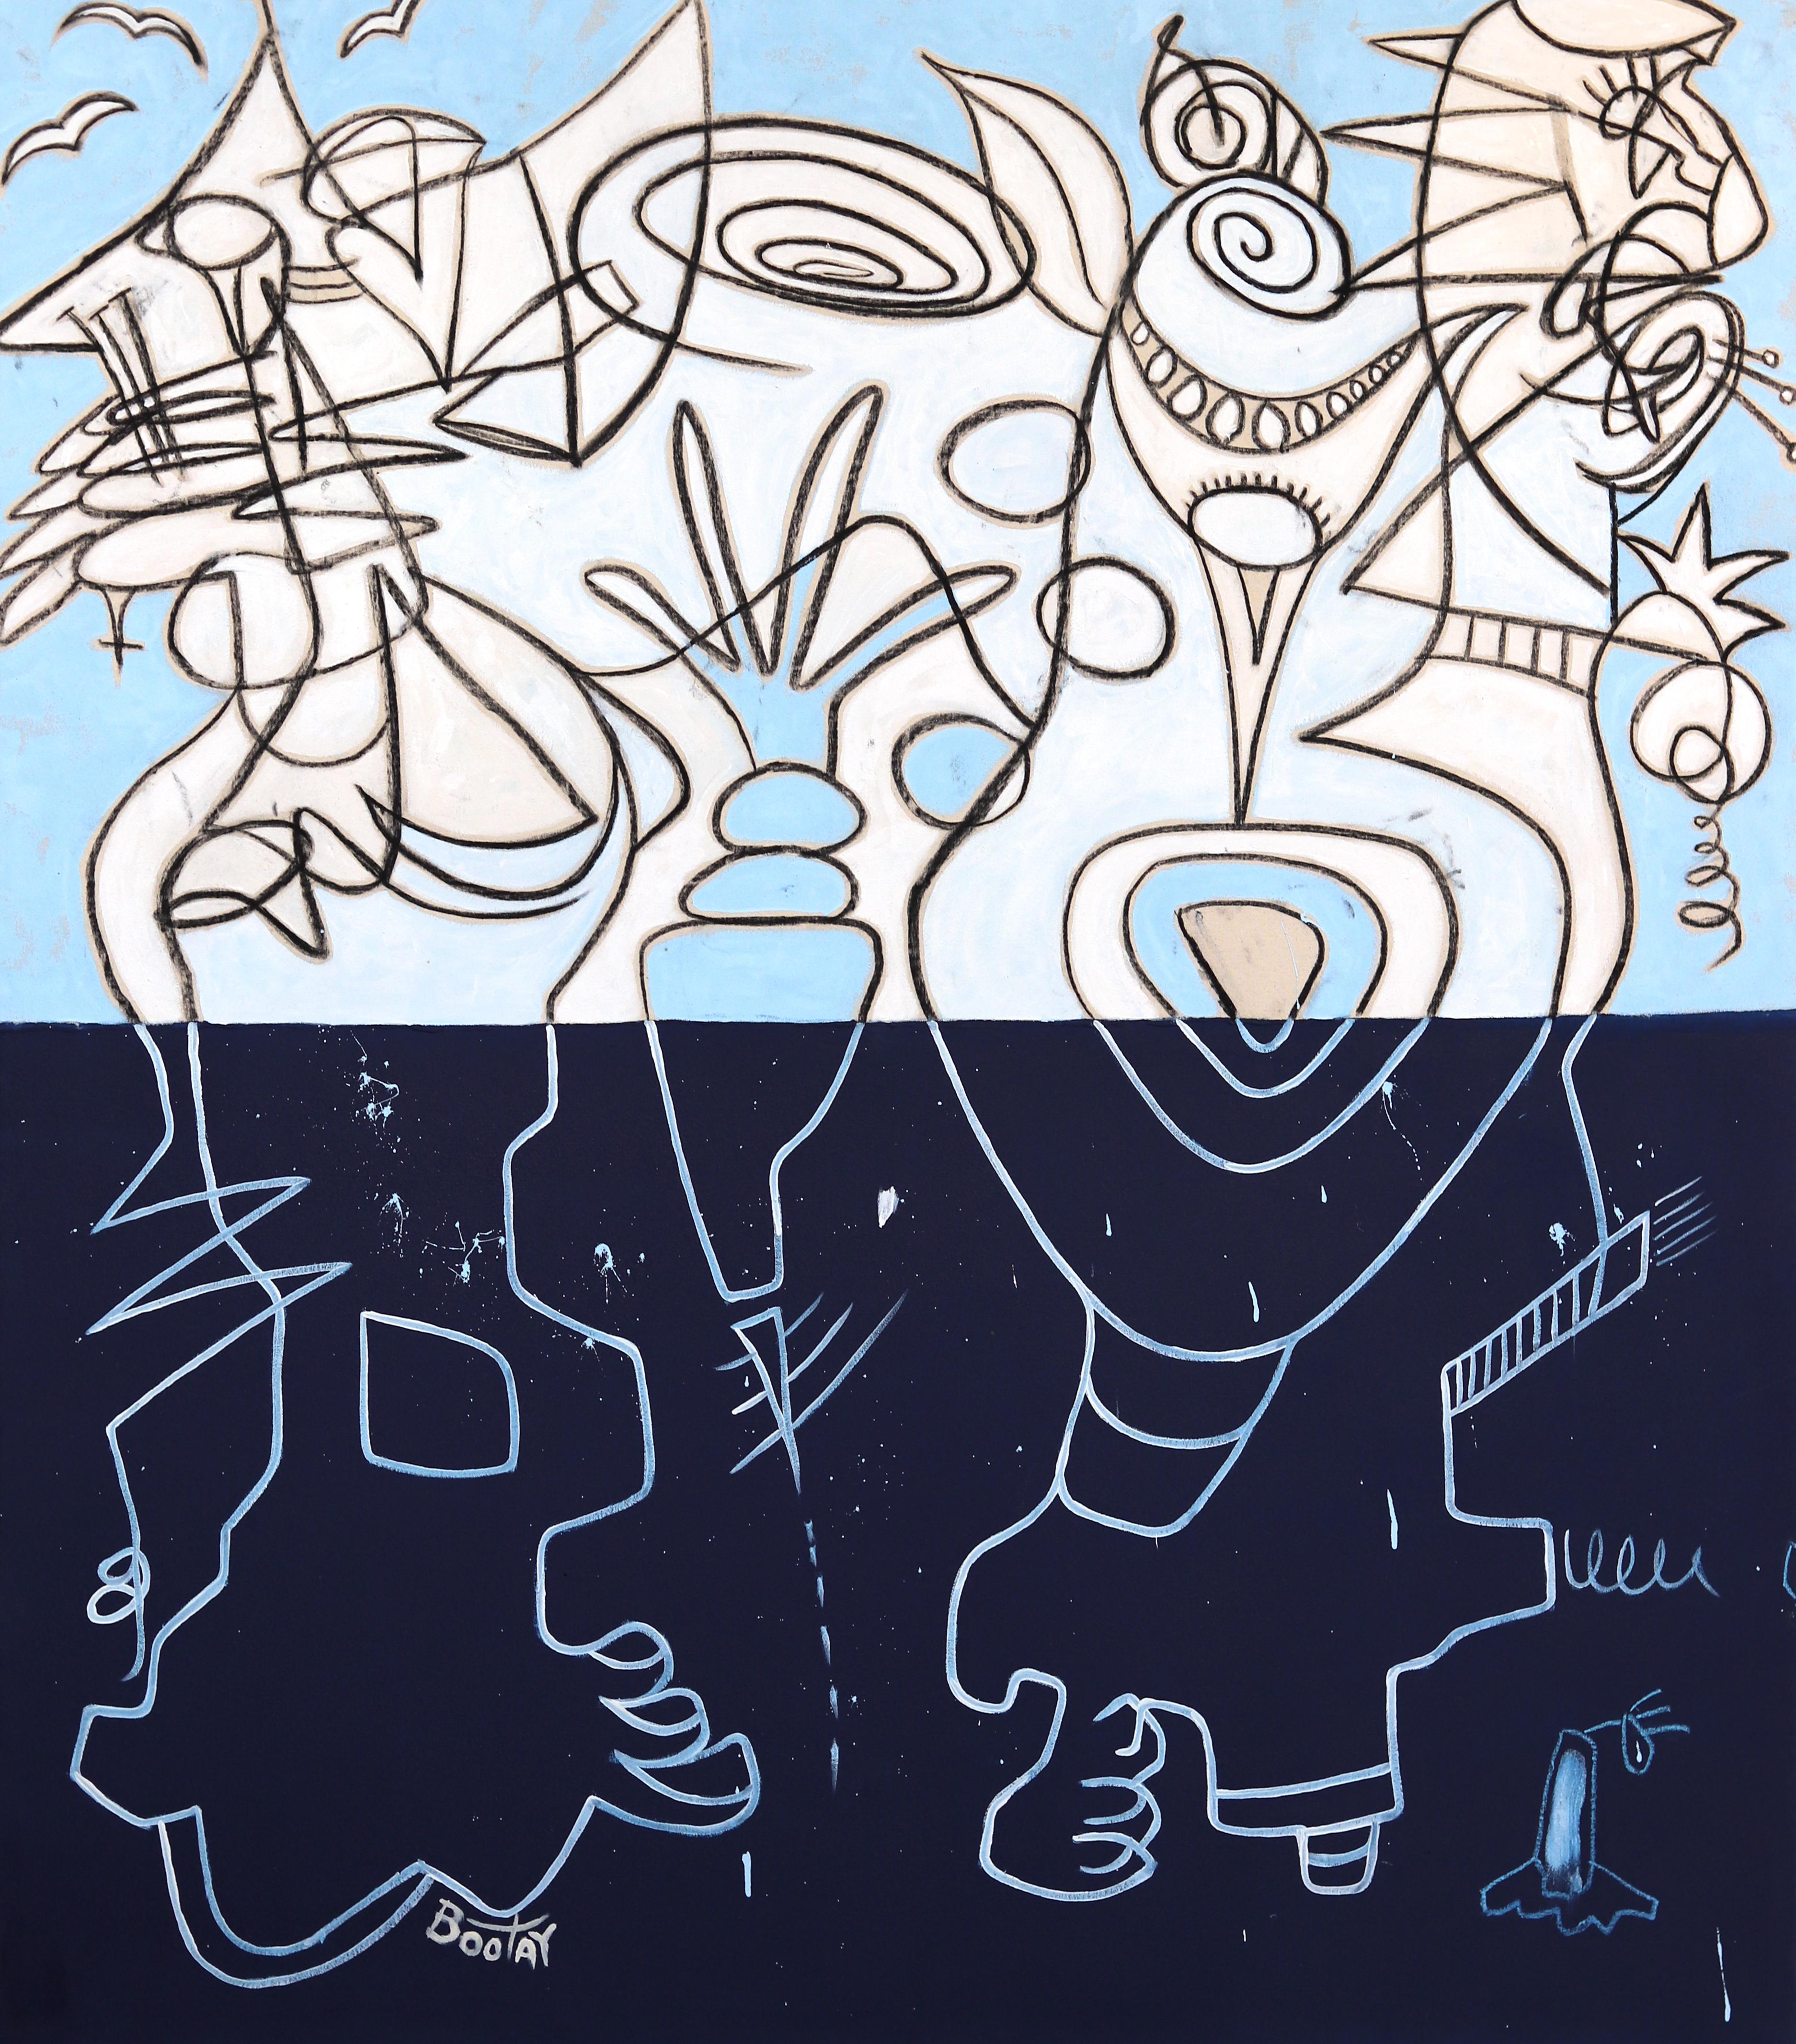 Blue Horizon - Surrealist Mixed Media Two Tone Blue Original Artwork on Canvas  - Mixed Media Art by Rue Bootay